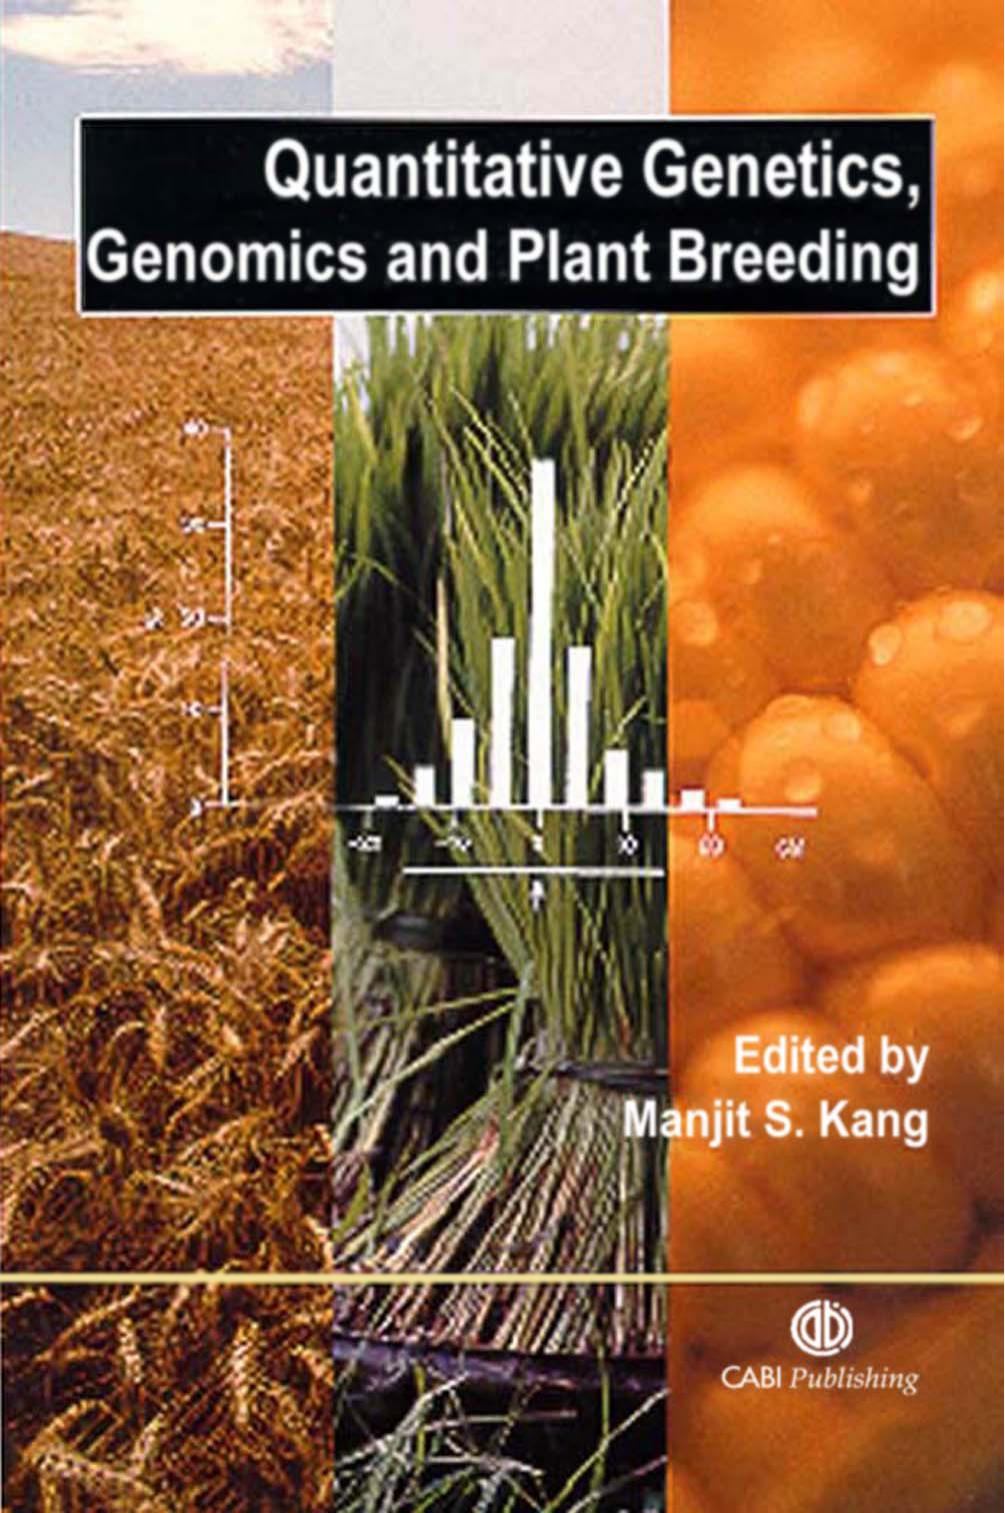 Quantitative Genetics, Genomics and Plant Breeding ( PDFDrive ), 2002